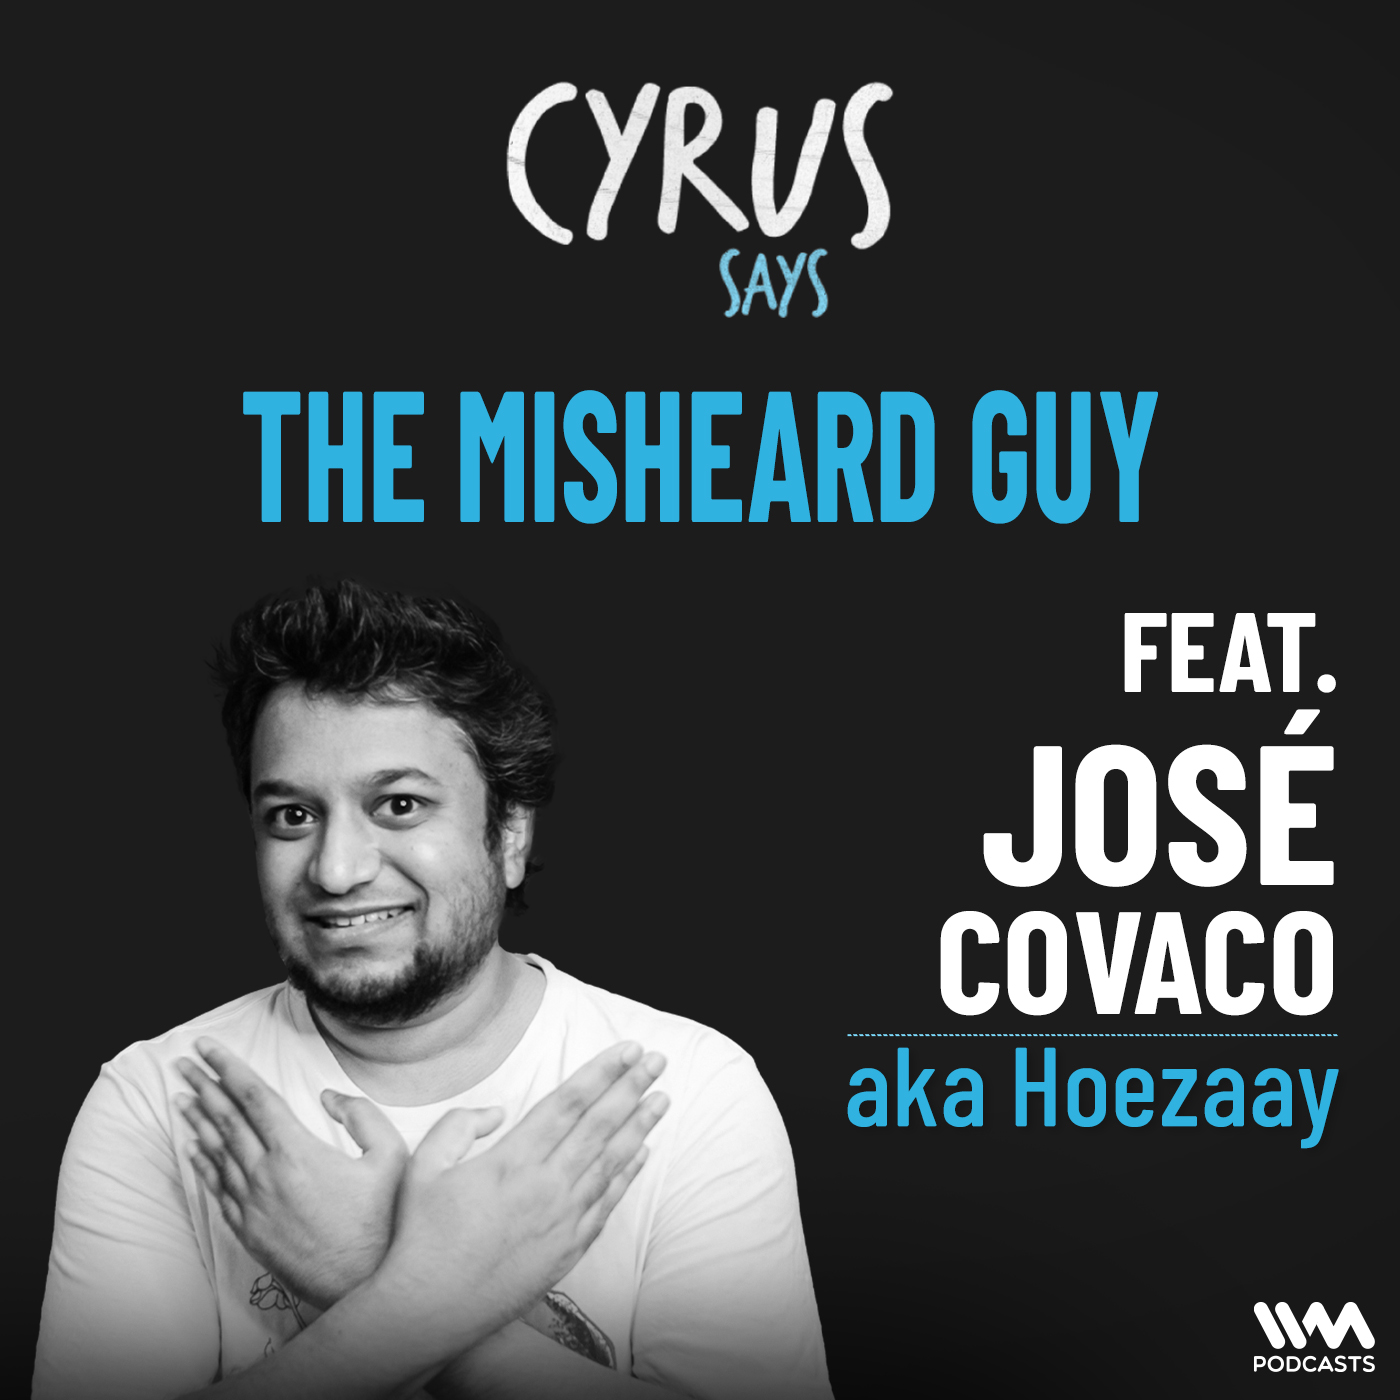 The Misheard Guy aka hoezaay aka José Covaco